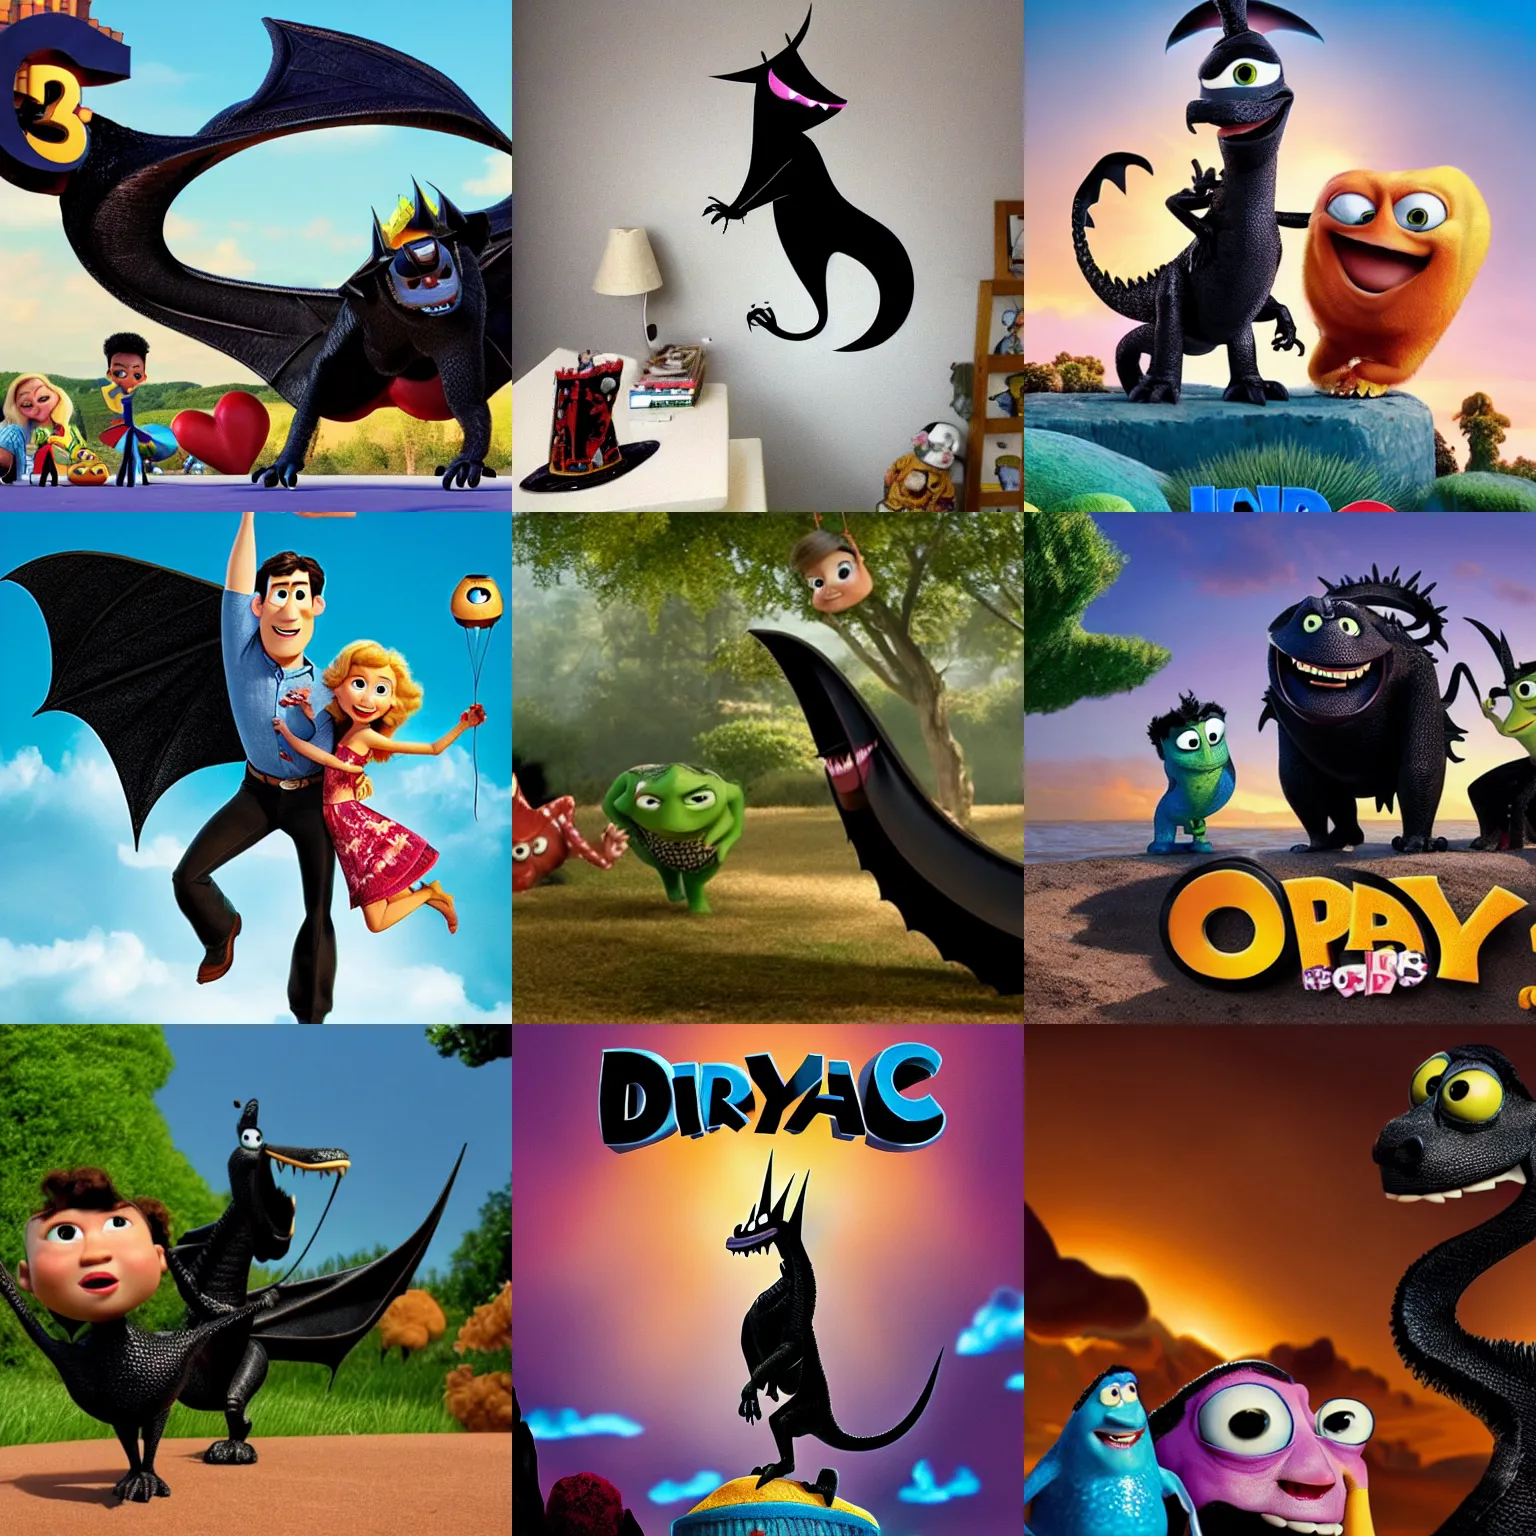 Prompt: pixar's UP, starring a black dragon